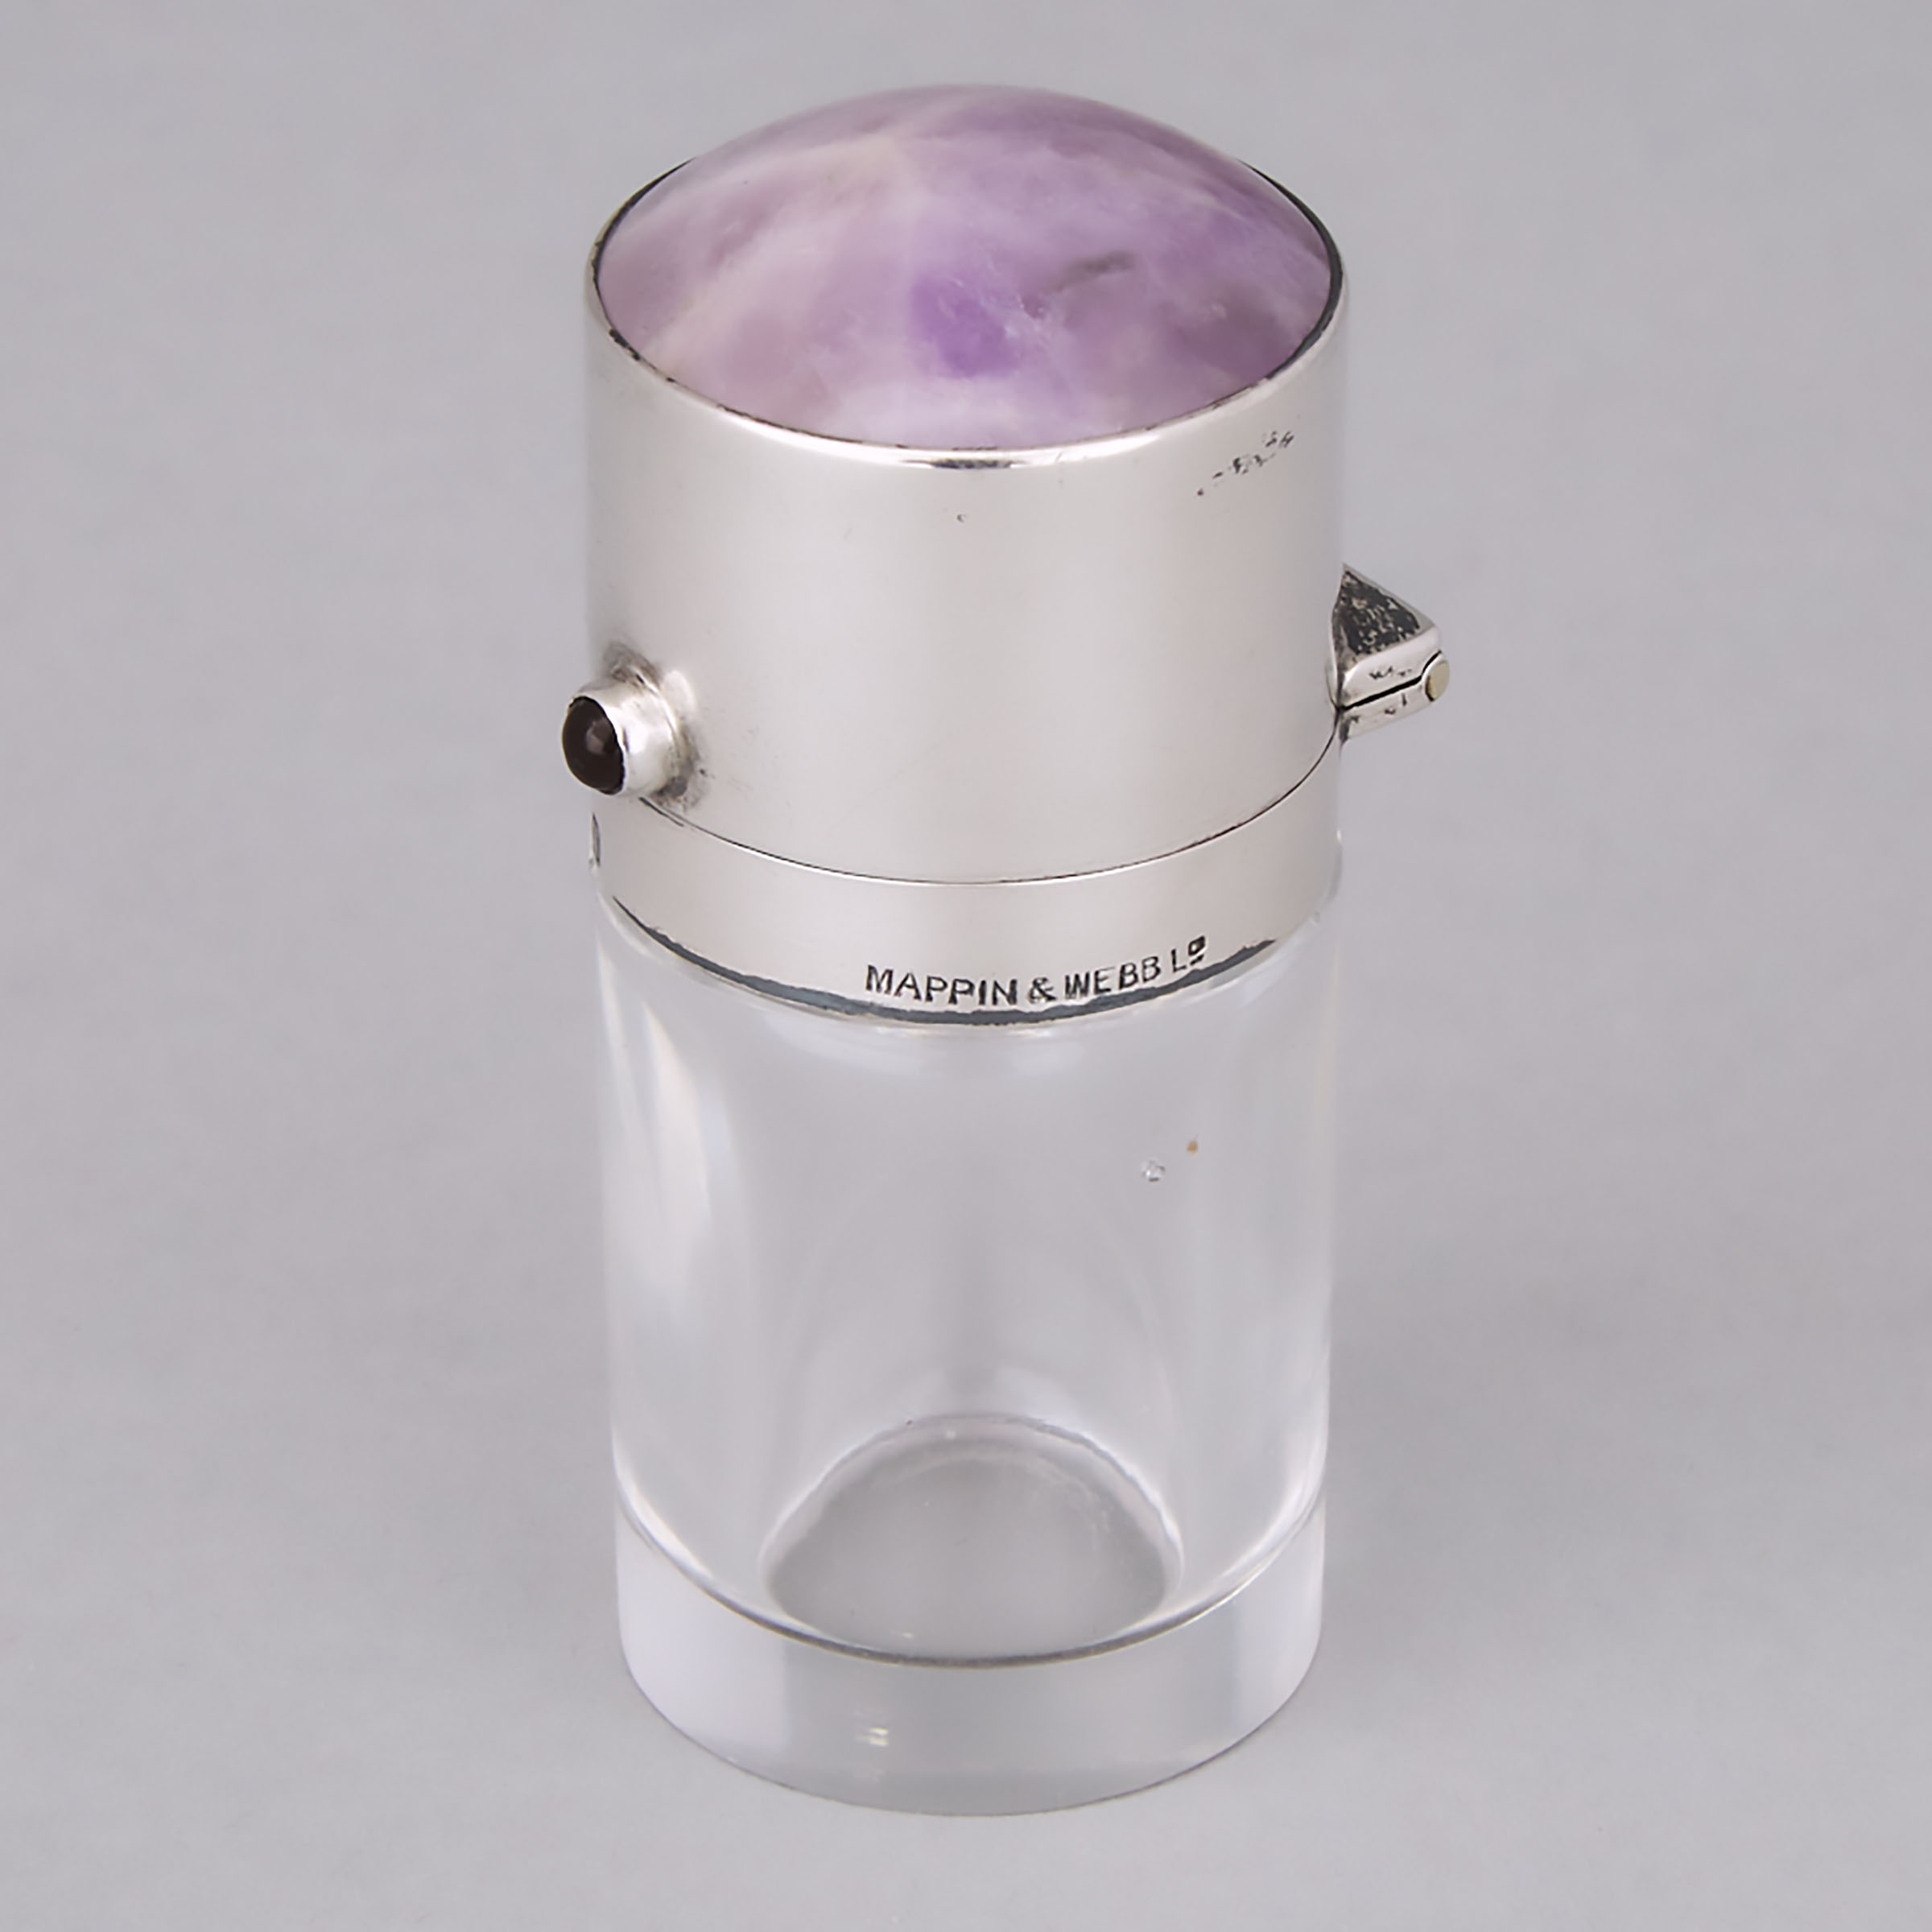 English Silver and Amethyst Quartz Mounted Glass Perfume Bottle, Levi & Salaman, Birmingham, 1912